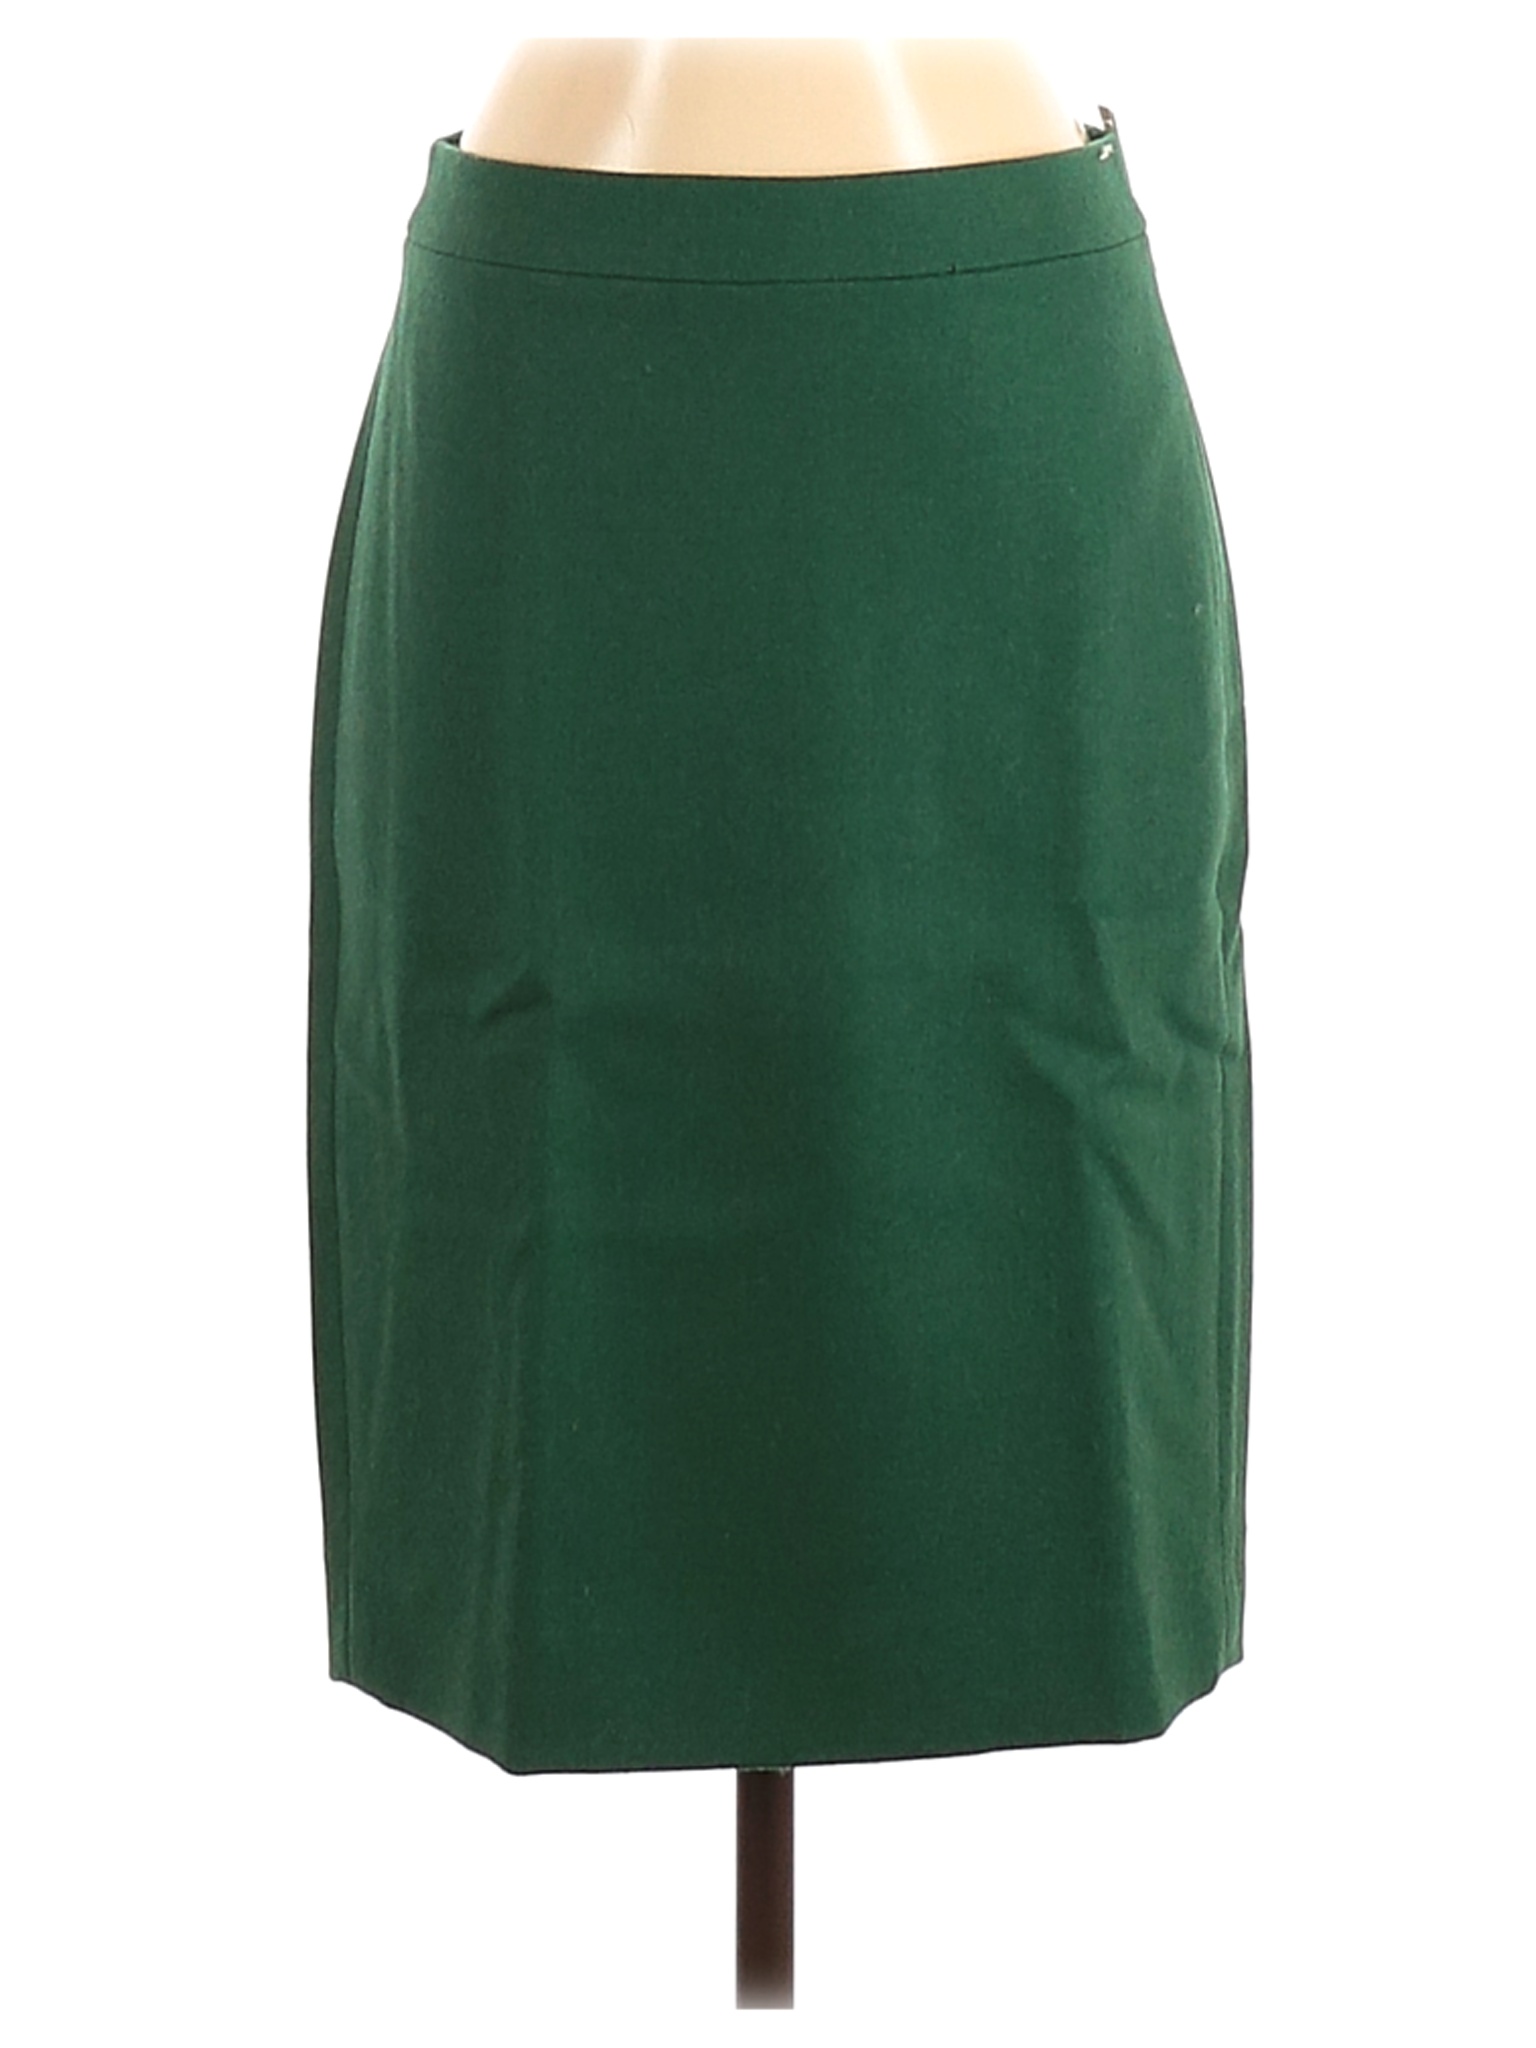 NWT J.Crew Women Green Wool Skirt 2 | eBay